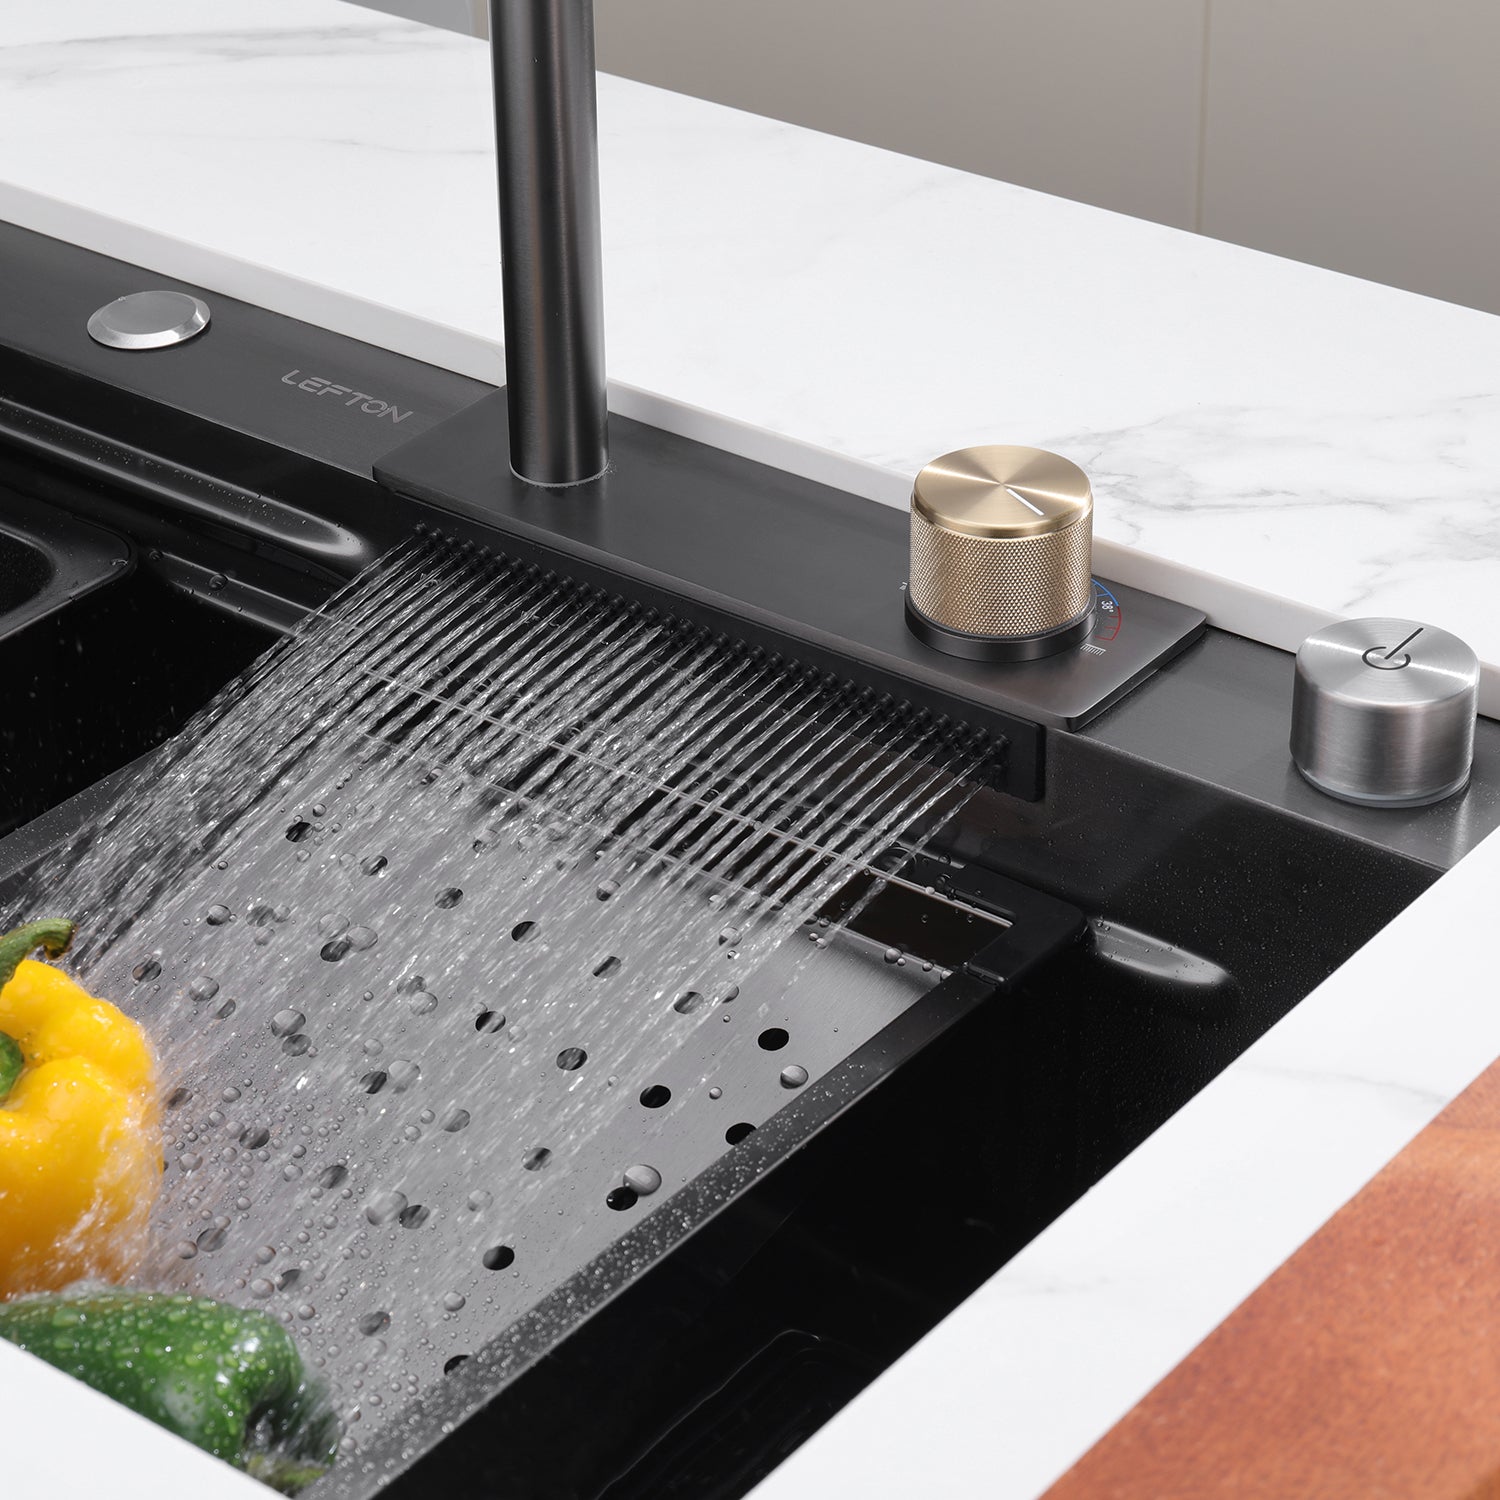 Lefton Smart Workstation Kitchen Sink Set with Waterfall Faucet-KS2203